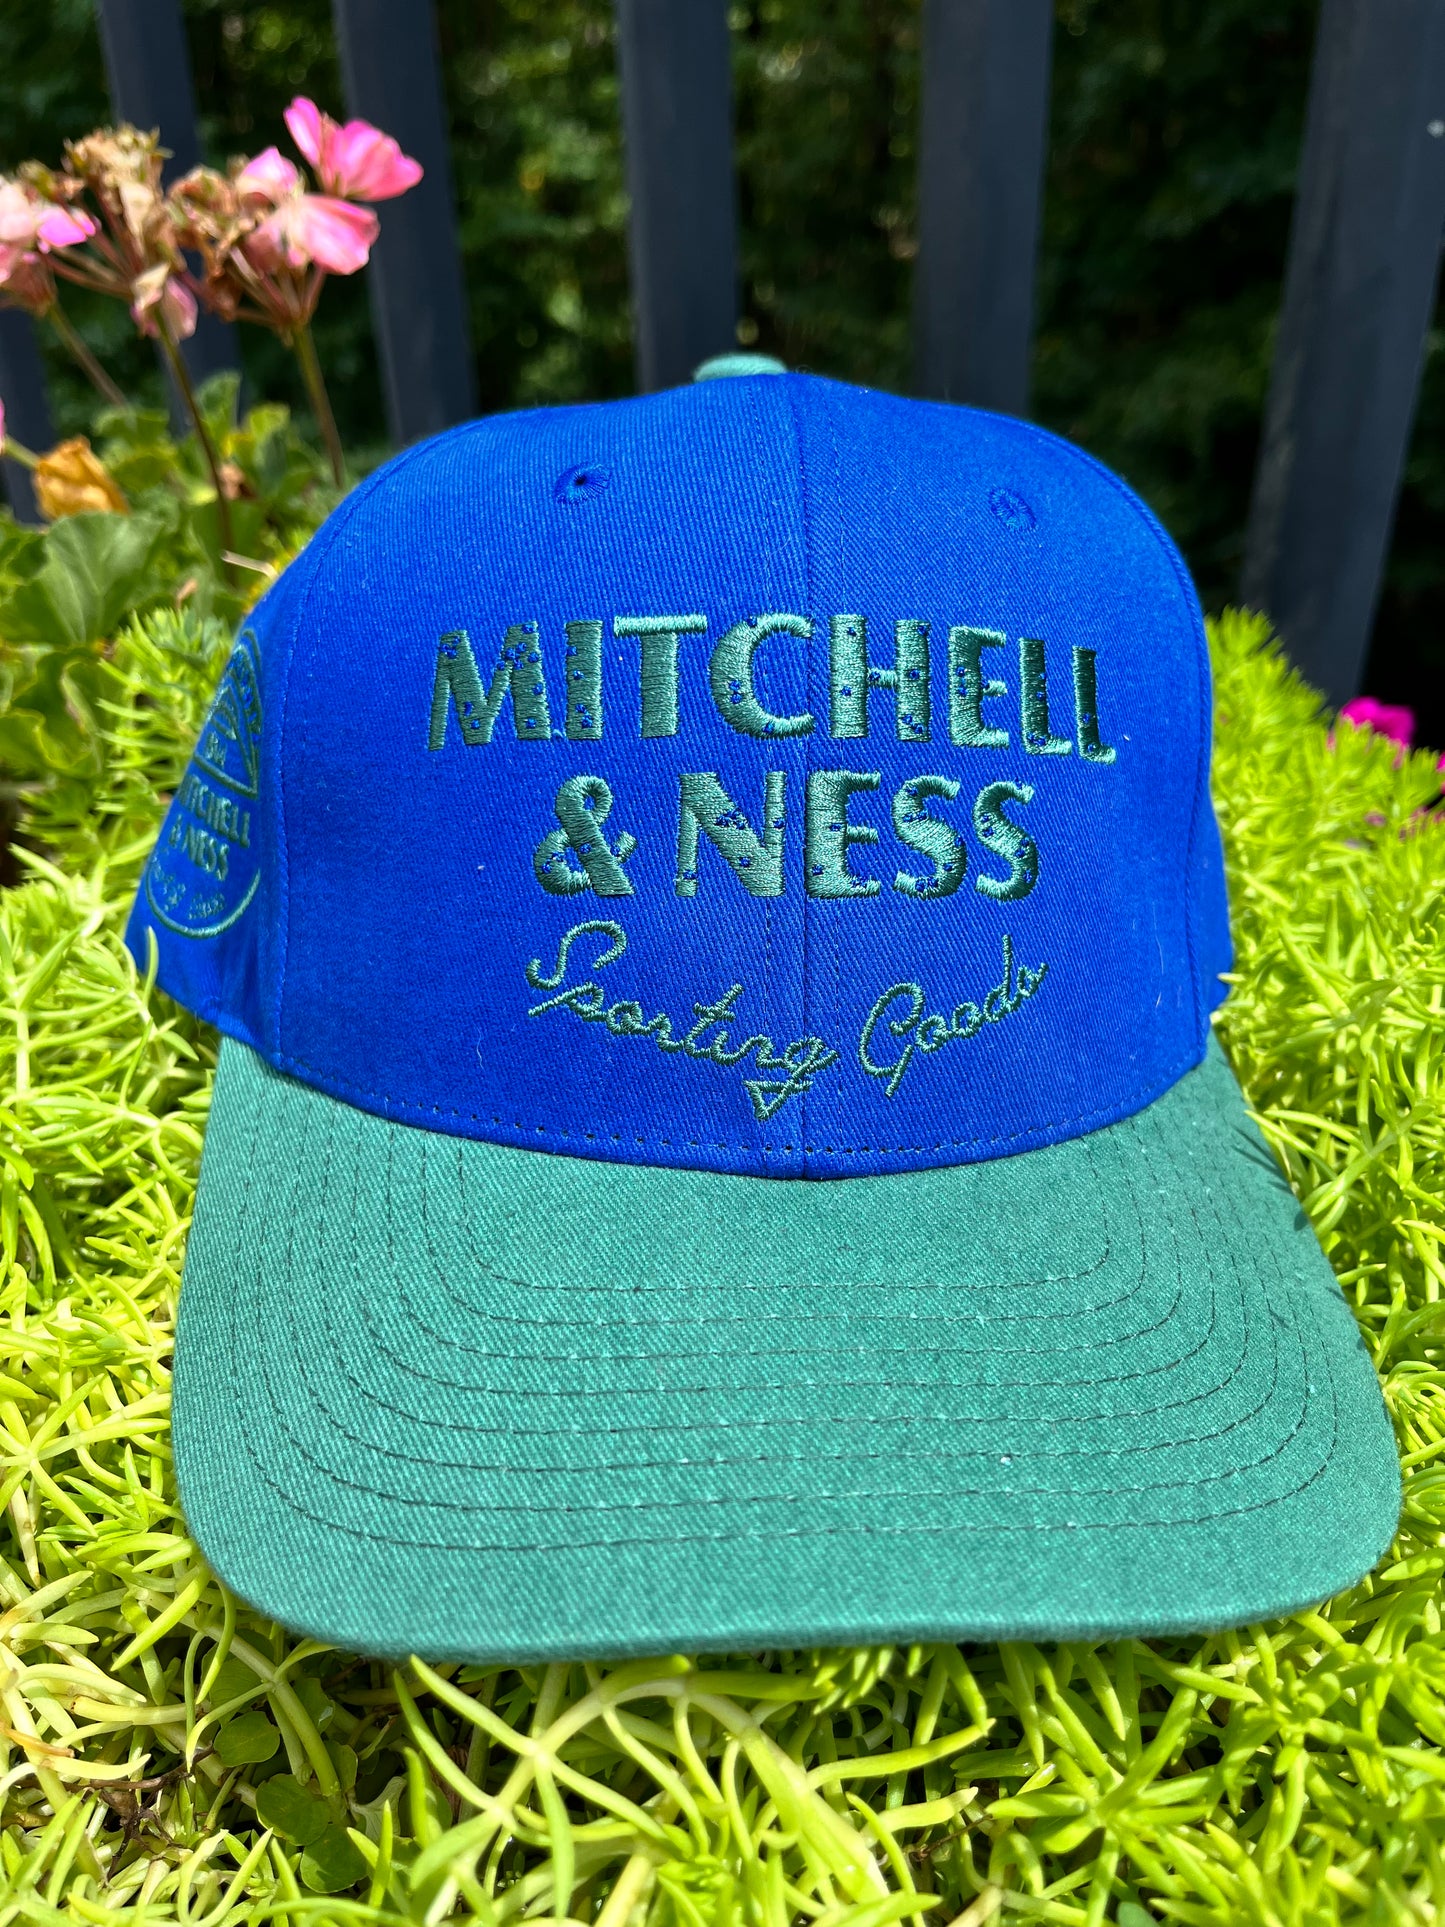 Sample Mitchell & Ness Snapback